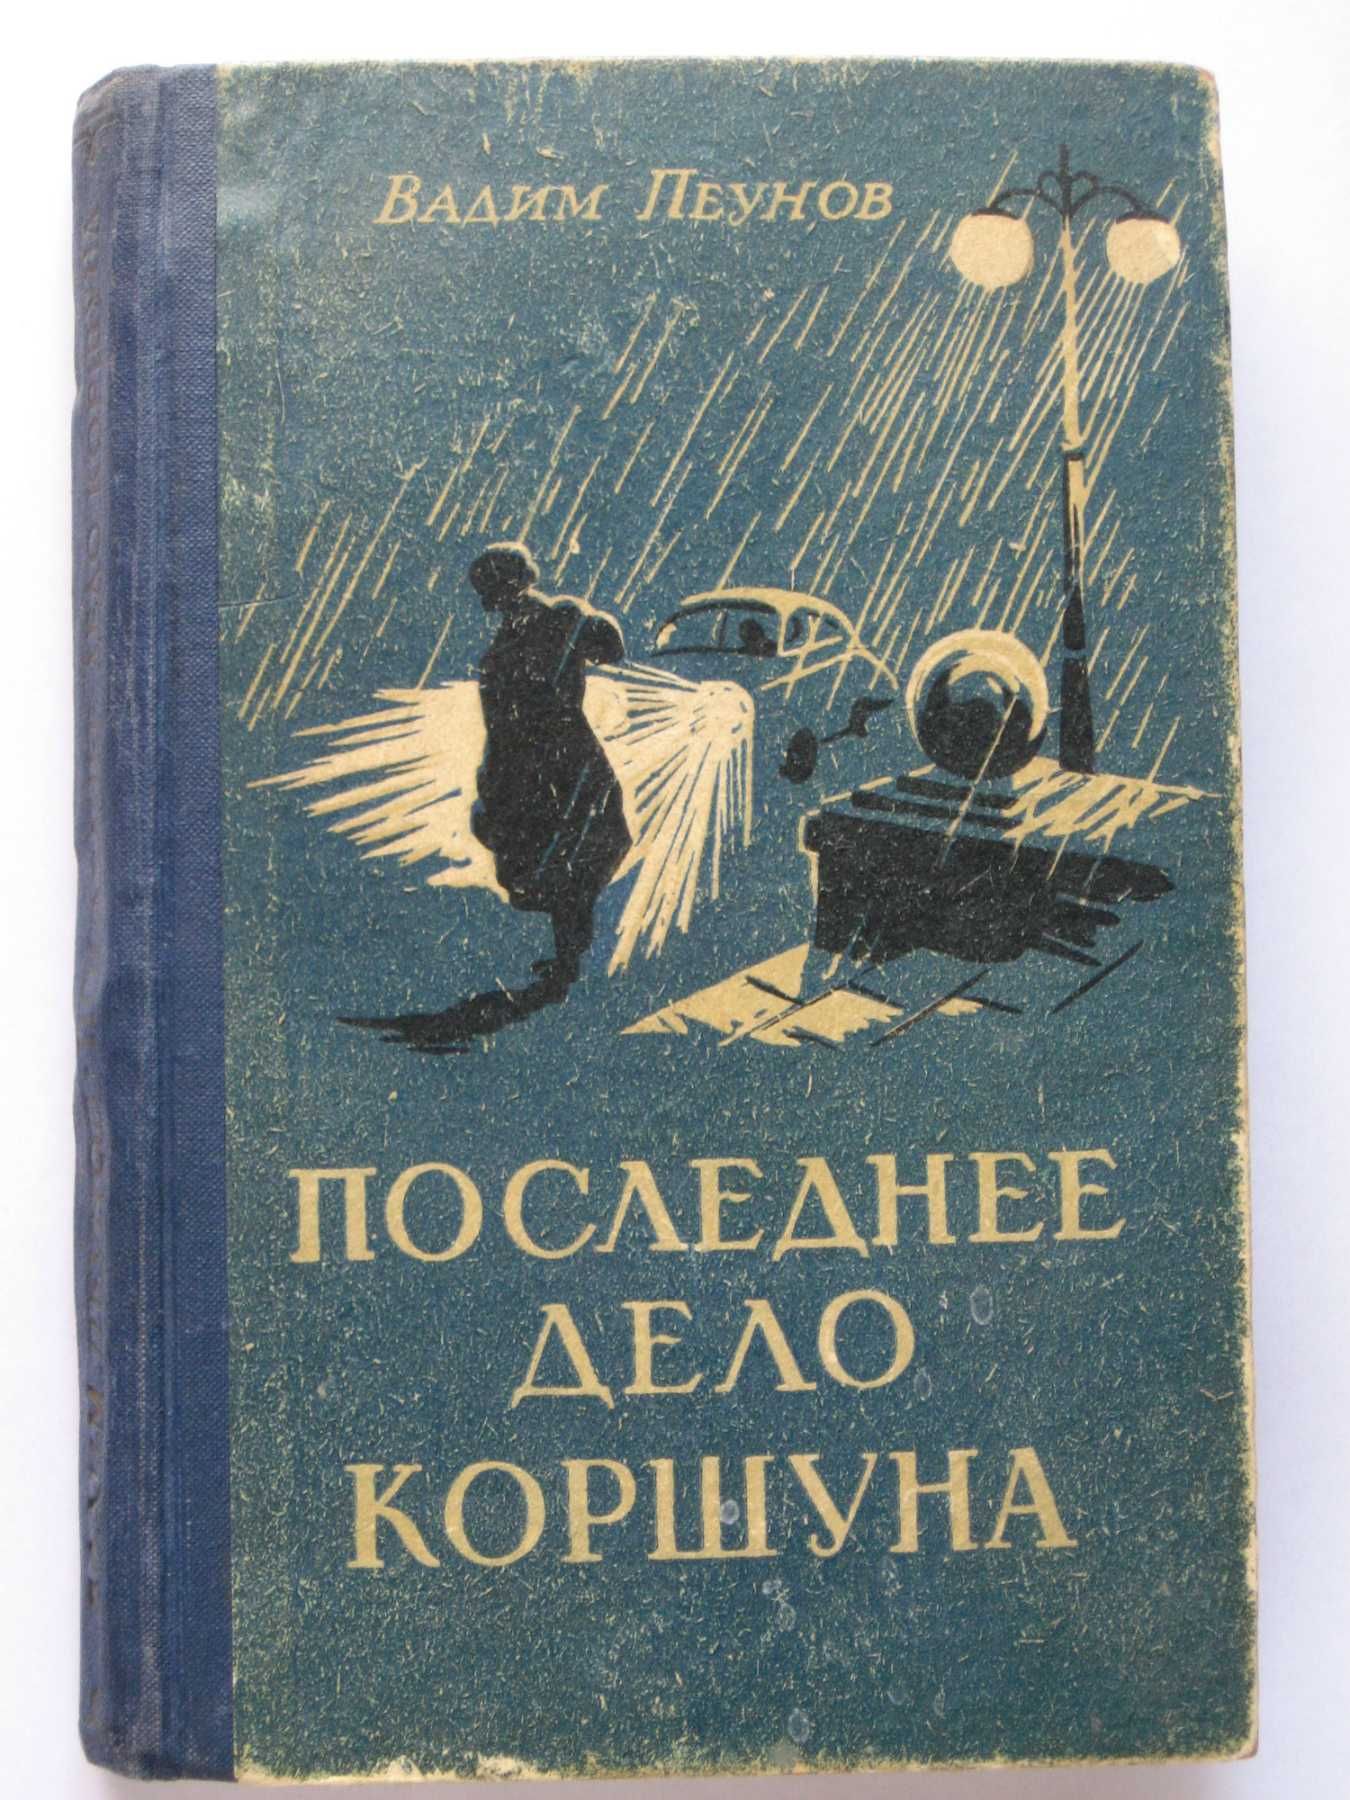 Вадим Пеунов "Последнее дело Коршуна". Редкая книга 1957 года!